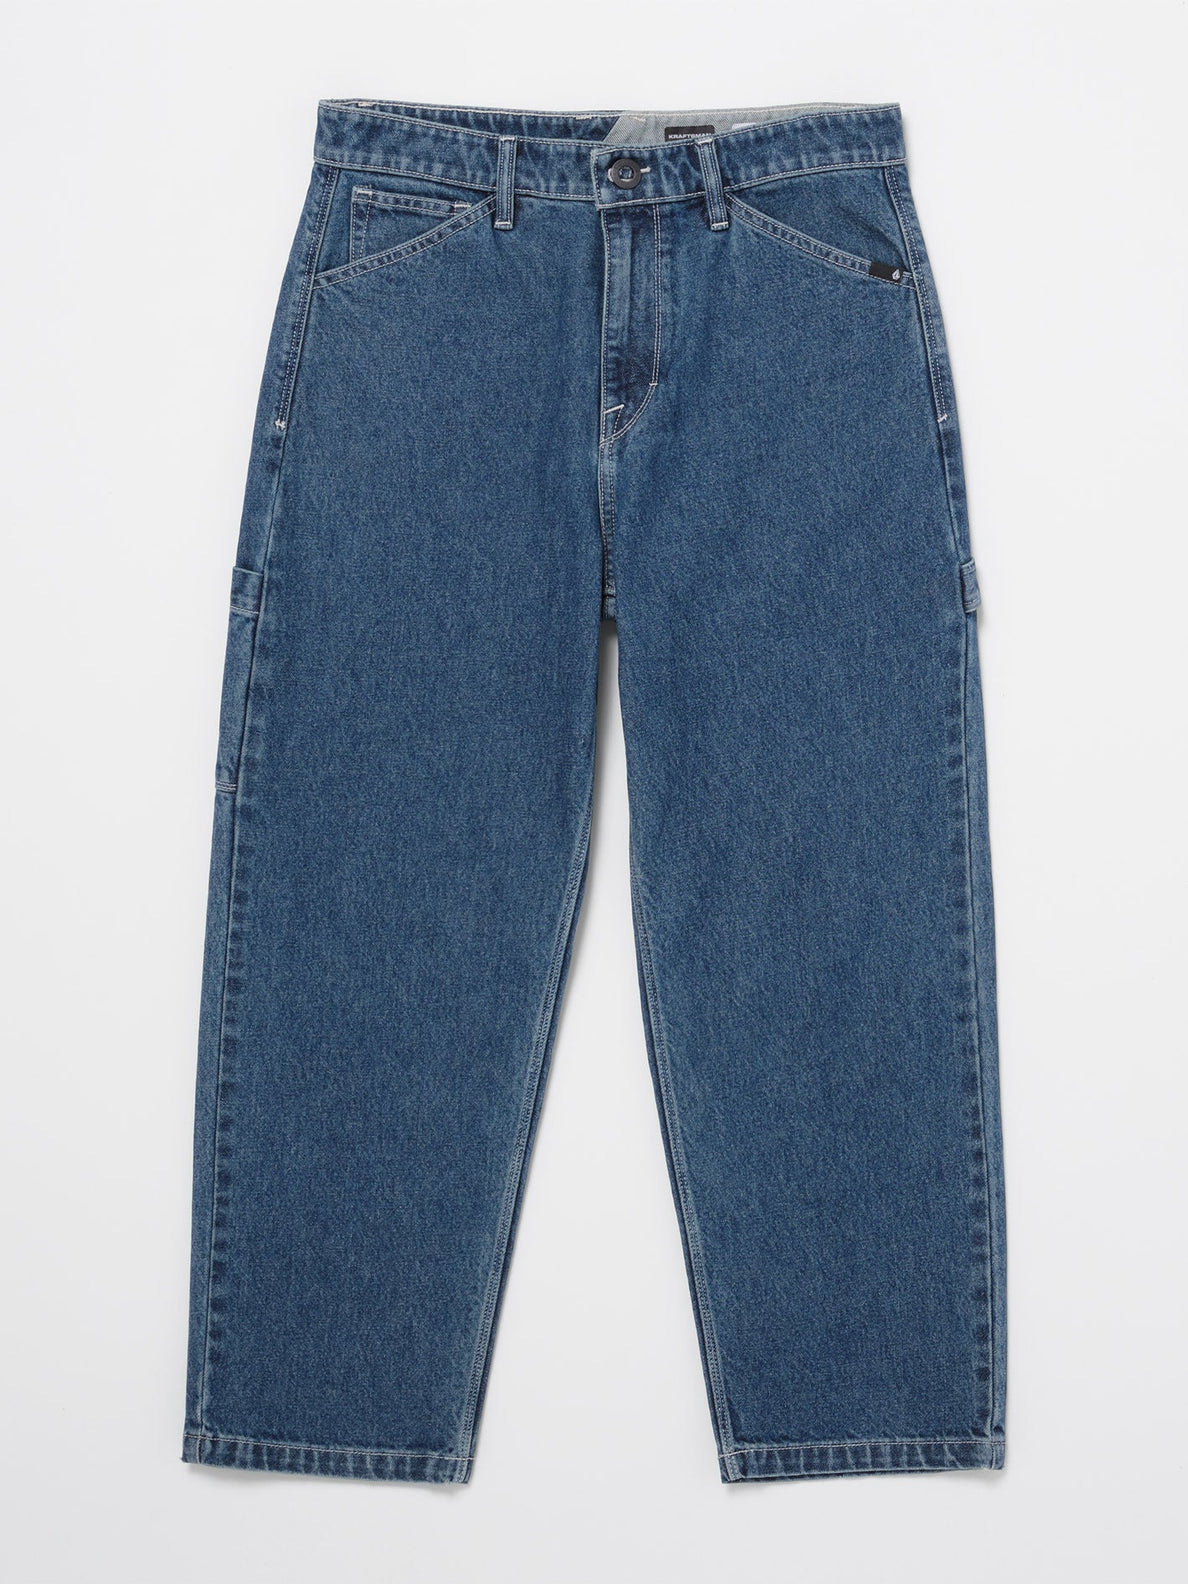 Kraftsman Jeans - INDIGO RIGID WASH